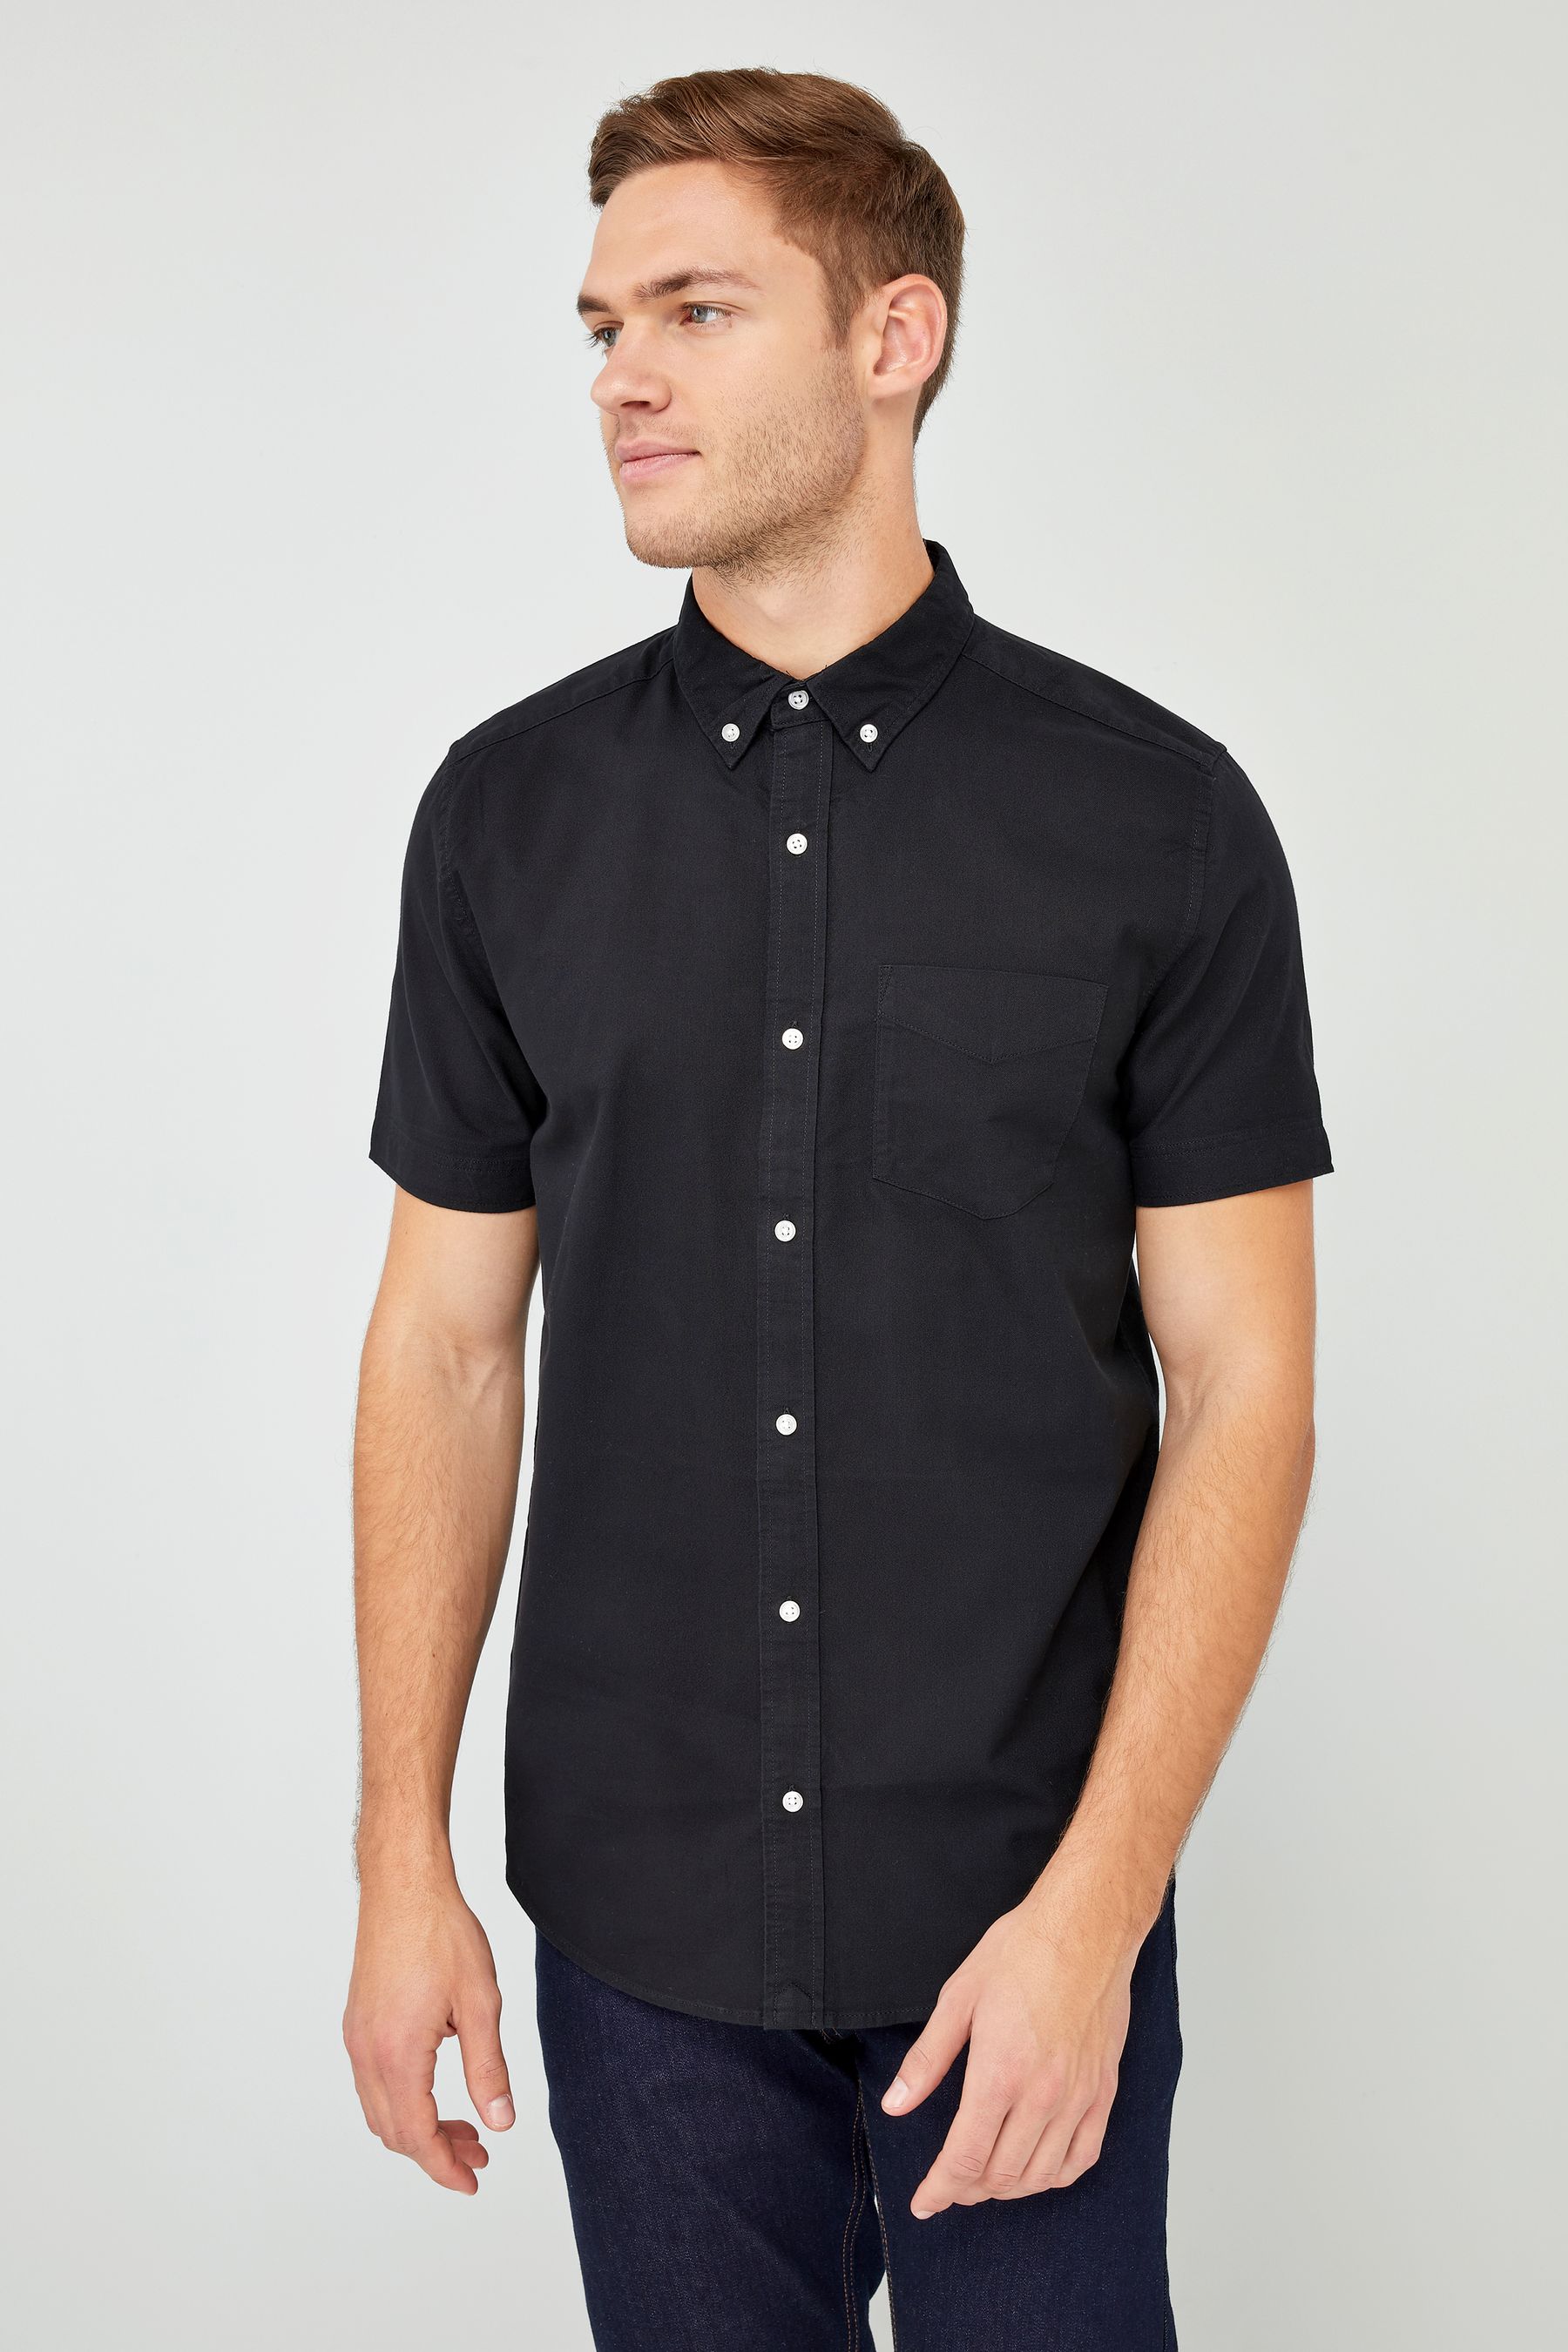 Buy Short Sleeve Oxford Shirt from Next Australia